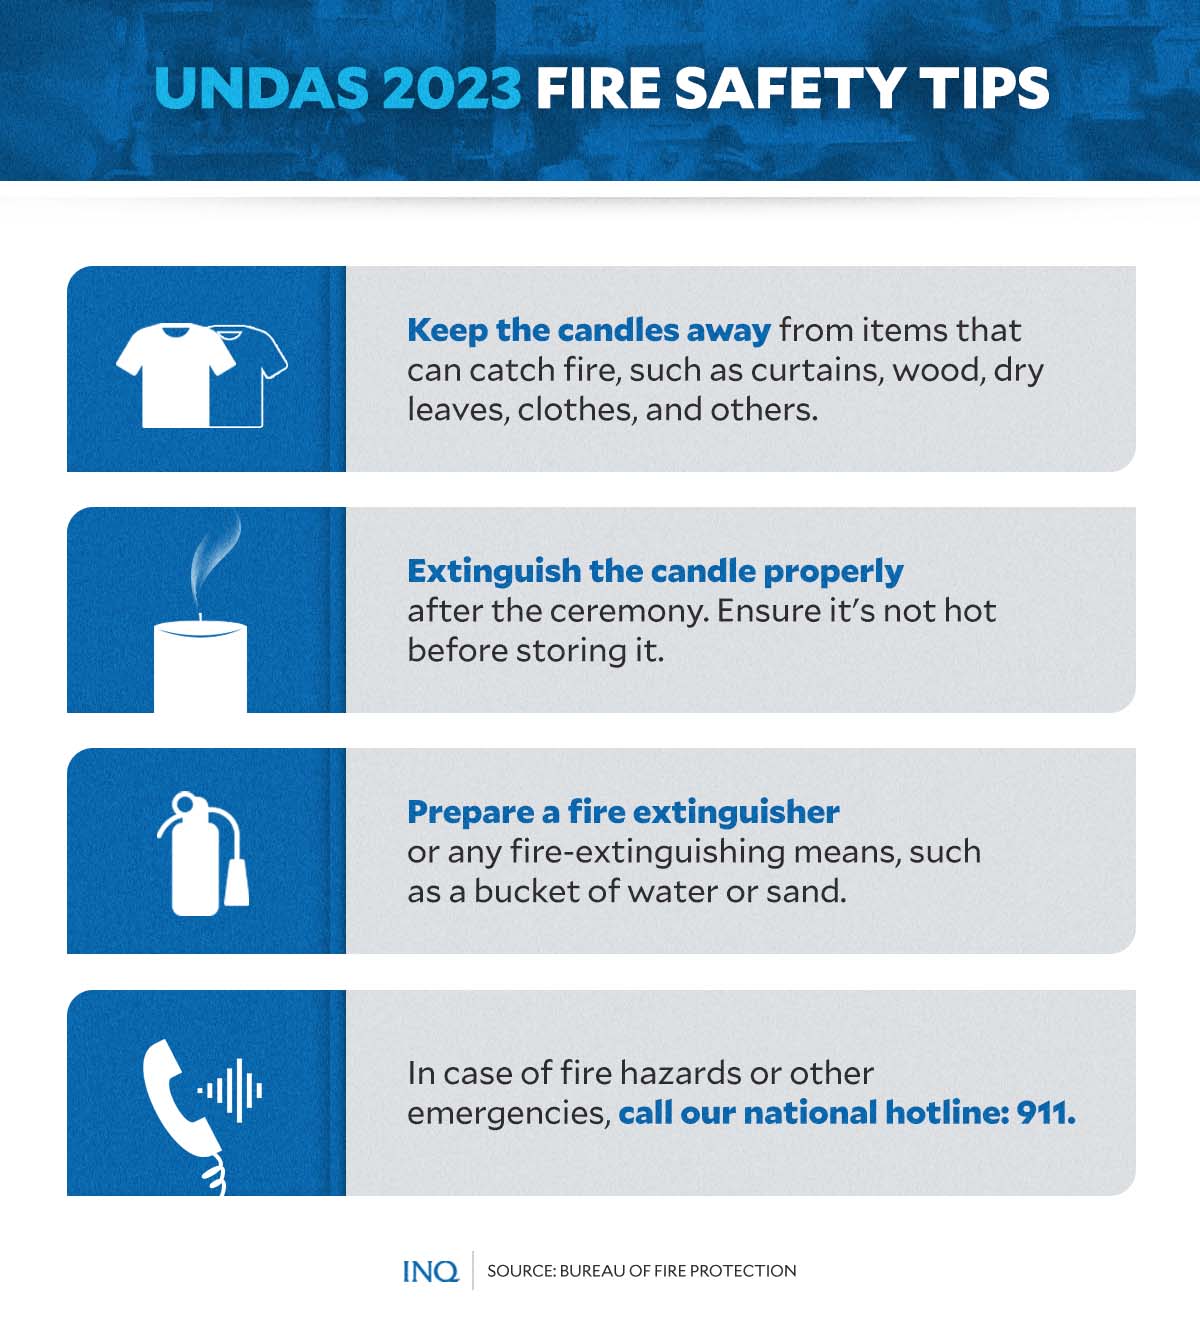 Undas 2023 fire safety tips